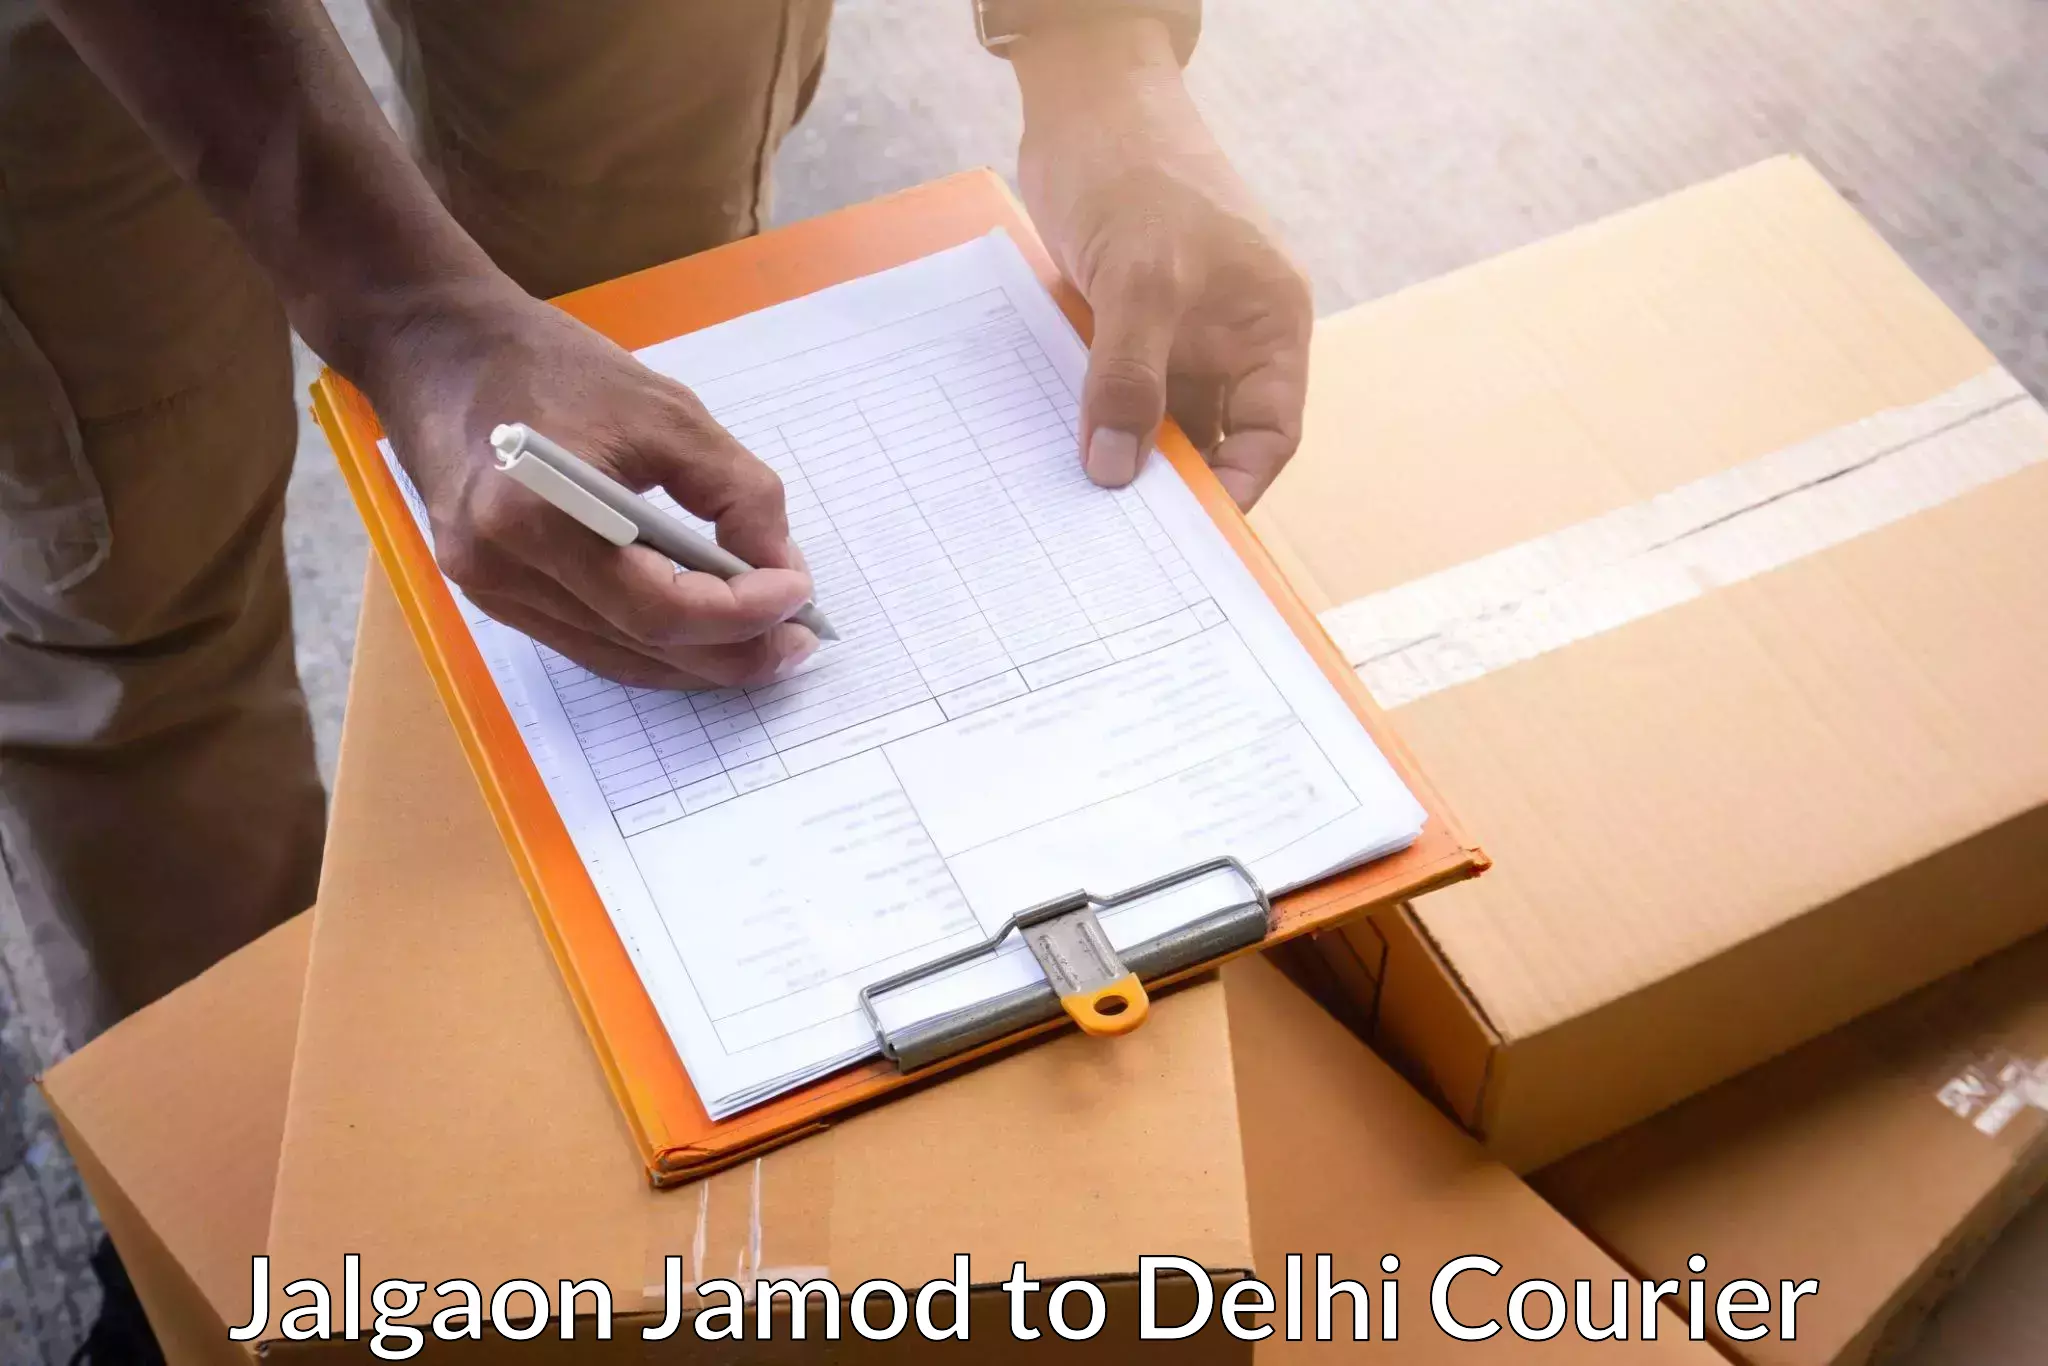 Global courier networks Jalgaon Jamod to University of Delhi